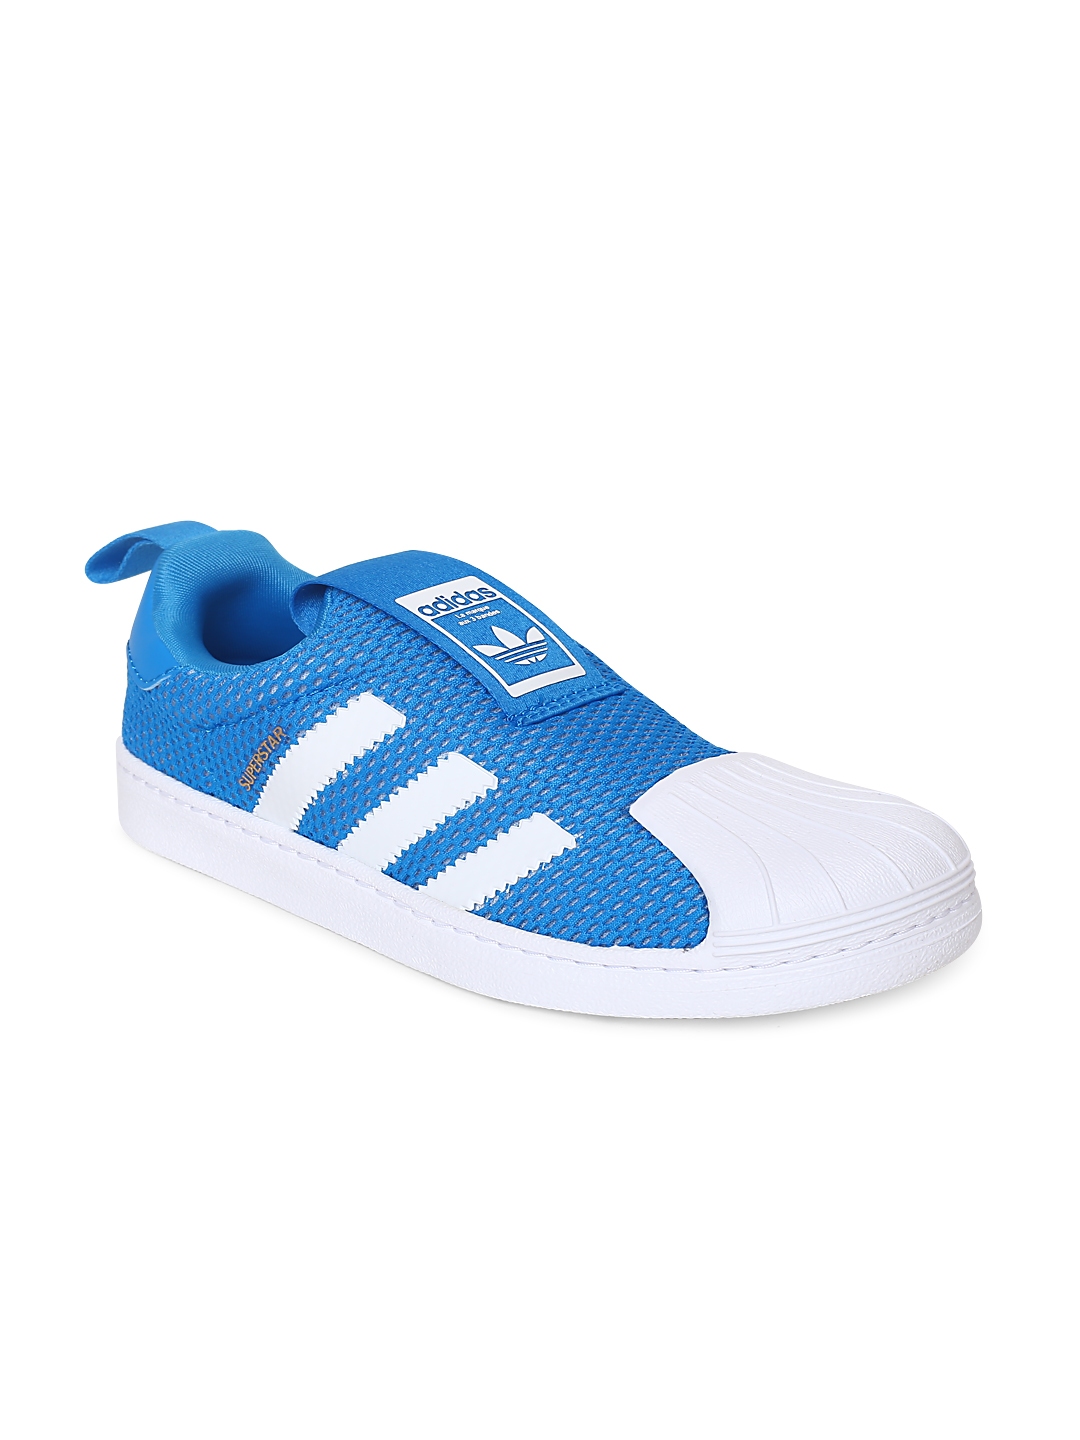 Buy ADIDAS Originals Kids Blue Superstars 360 C Casual Shoes - Casual ...